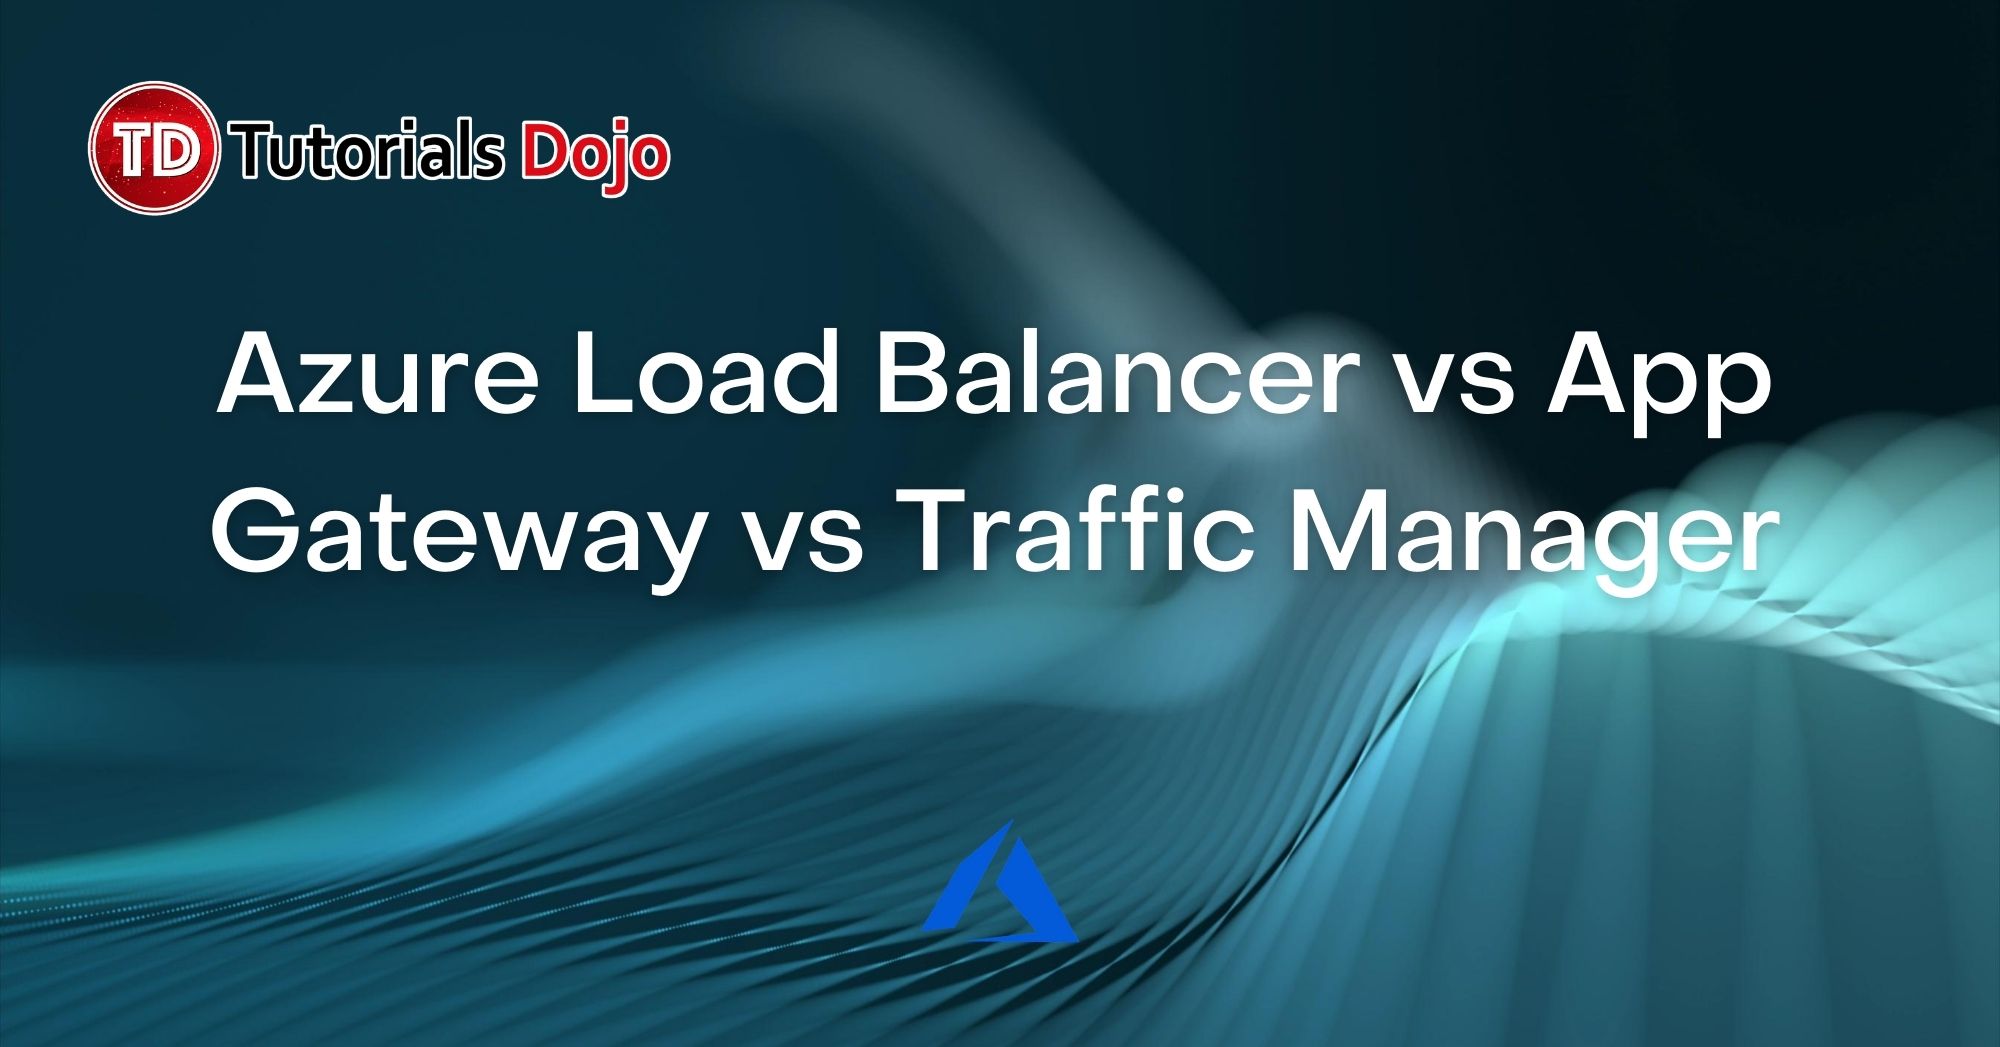 Azure Load Balancer vs App Gateway vs Traffic Manager